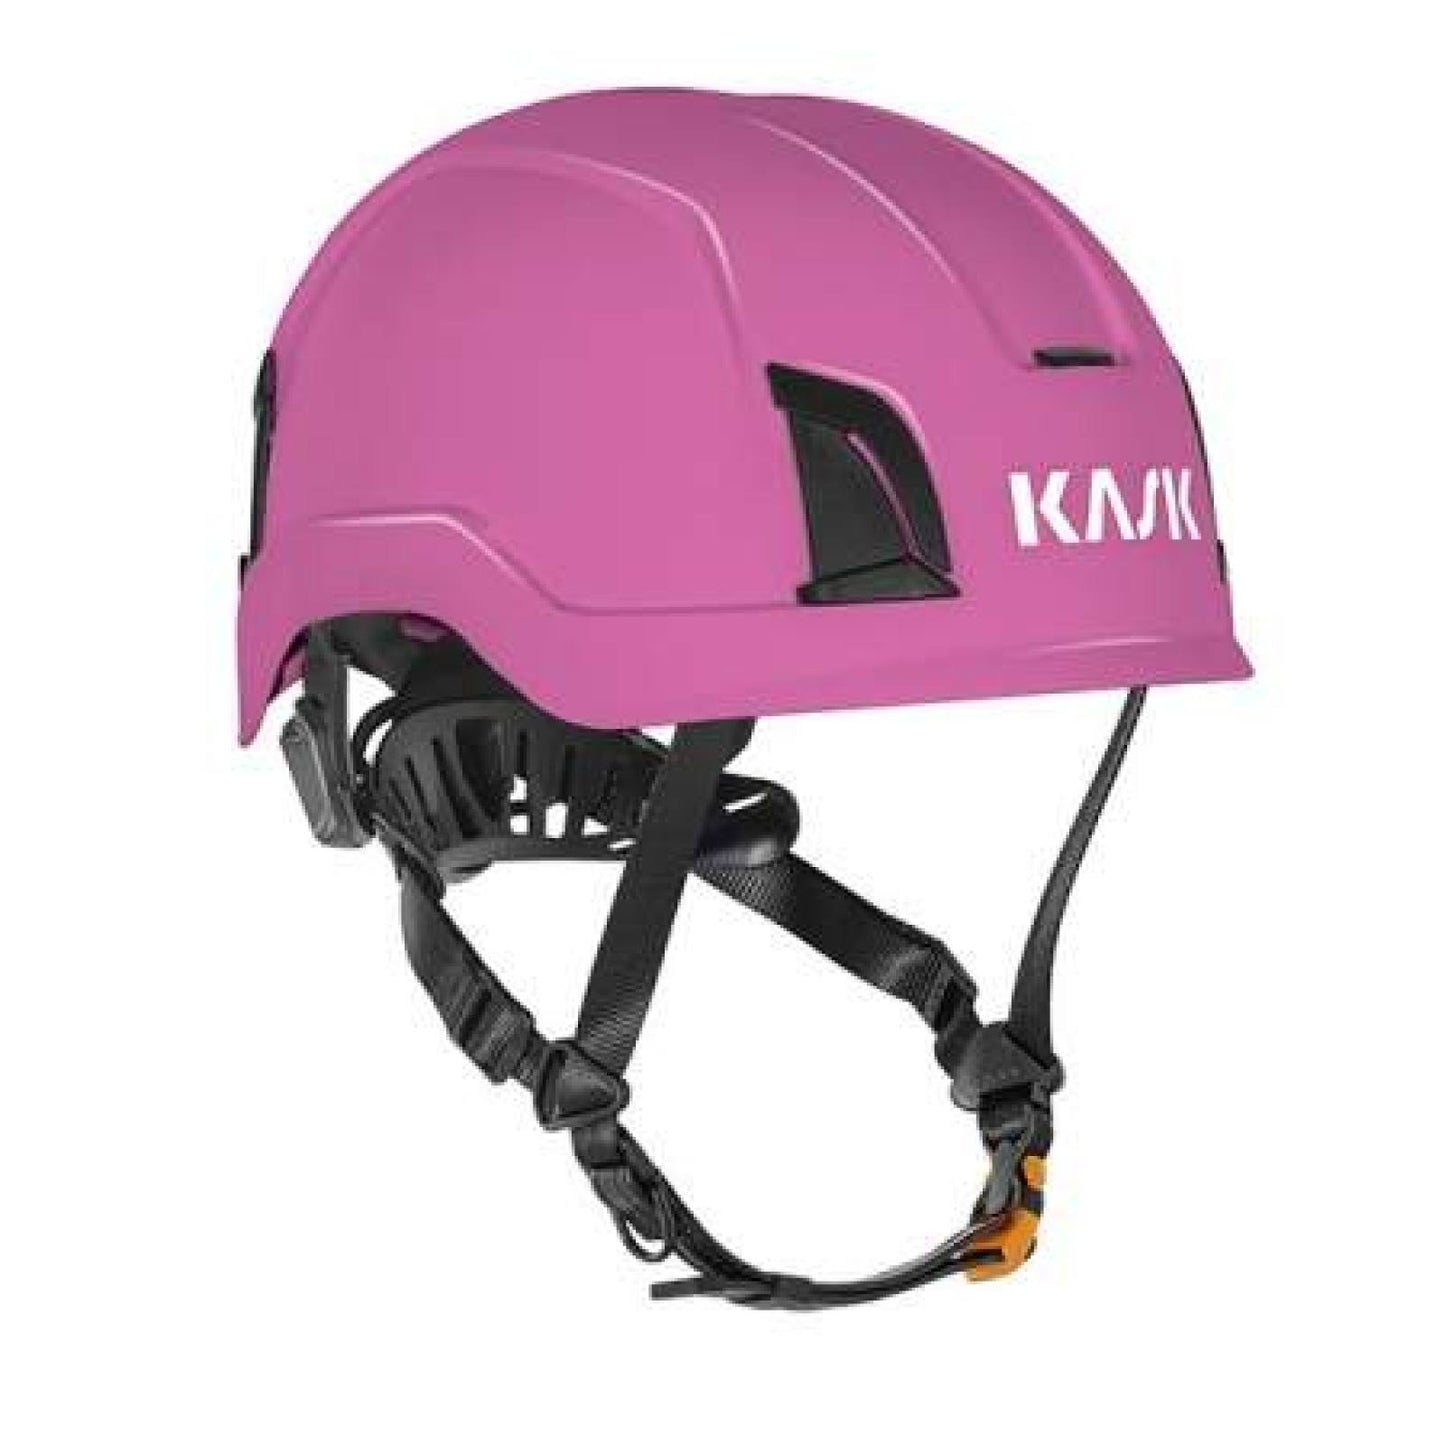 Kask ZENITH X PL 通風款登山岩盔[ EN 12492 ] 6色– 尼莫莫戶外選物 